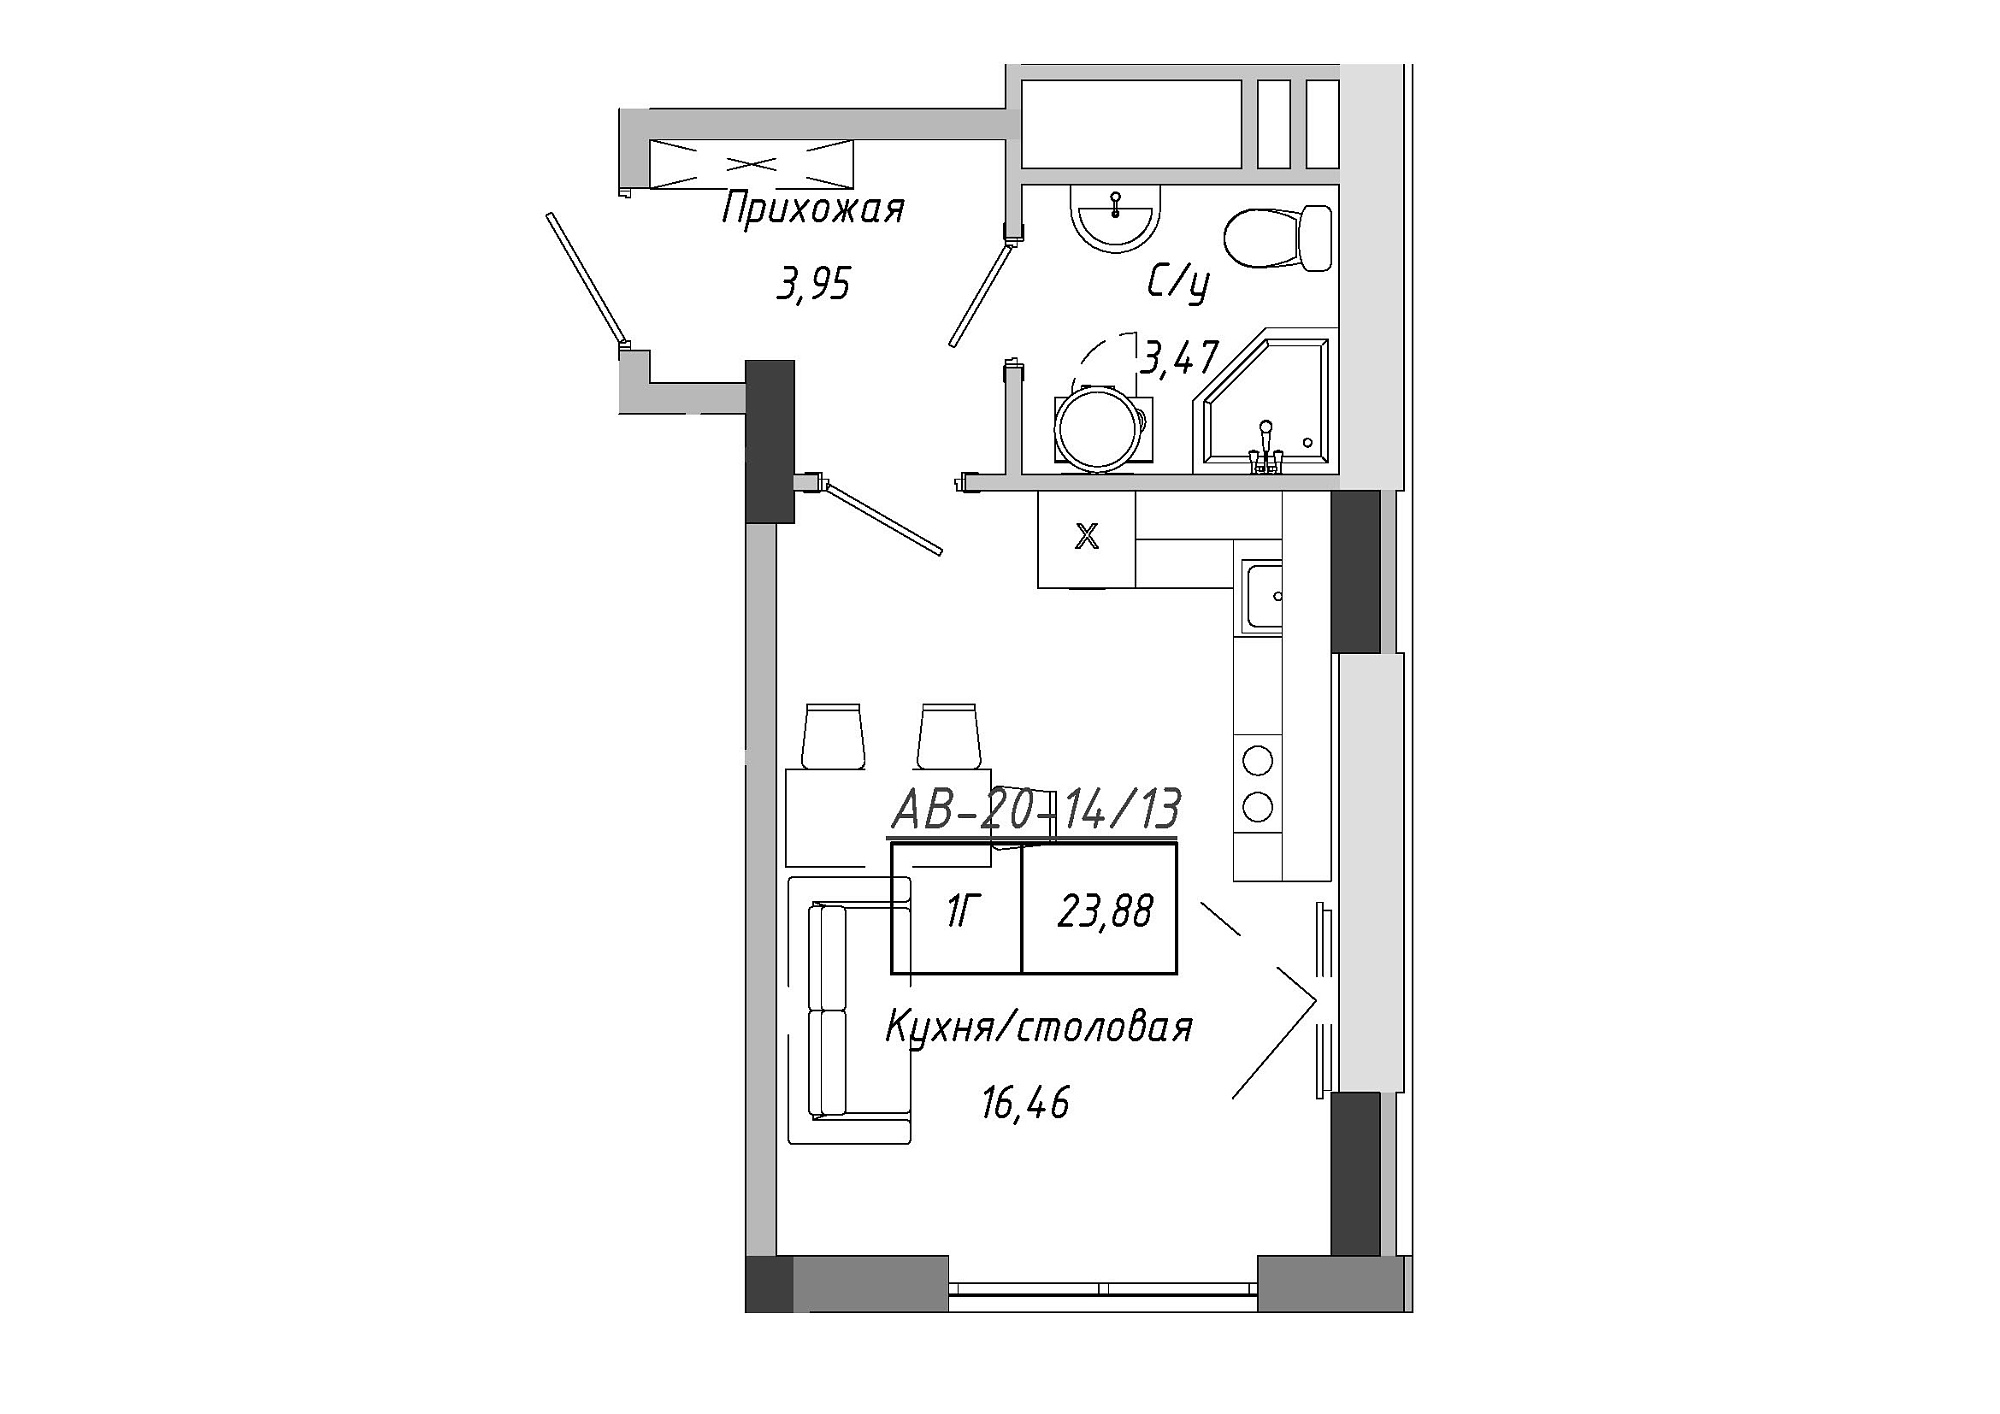 Планировка Smart-квартира площей 23.88м2, AB-20-14/00113.